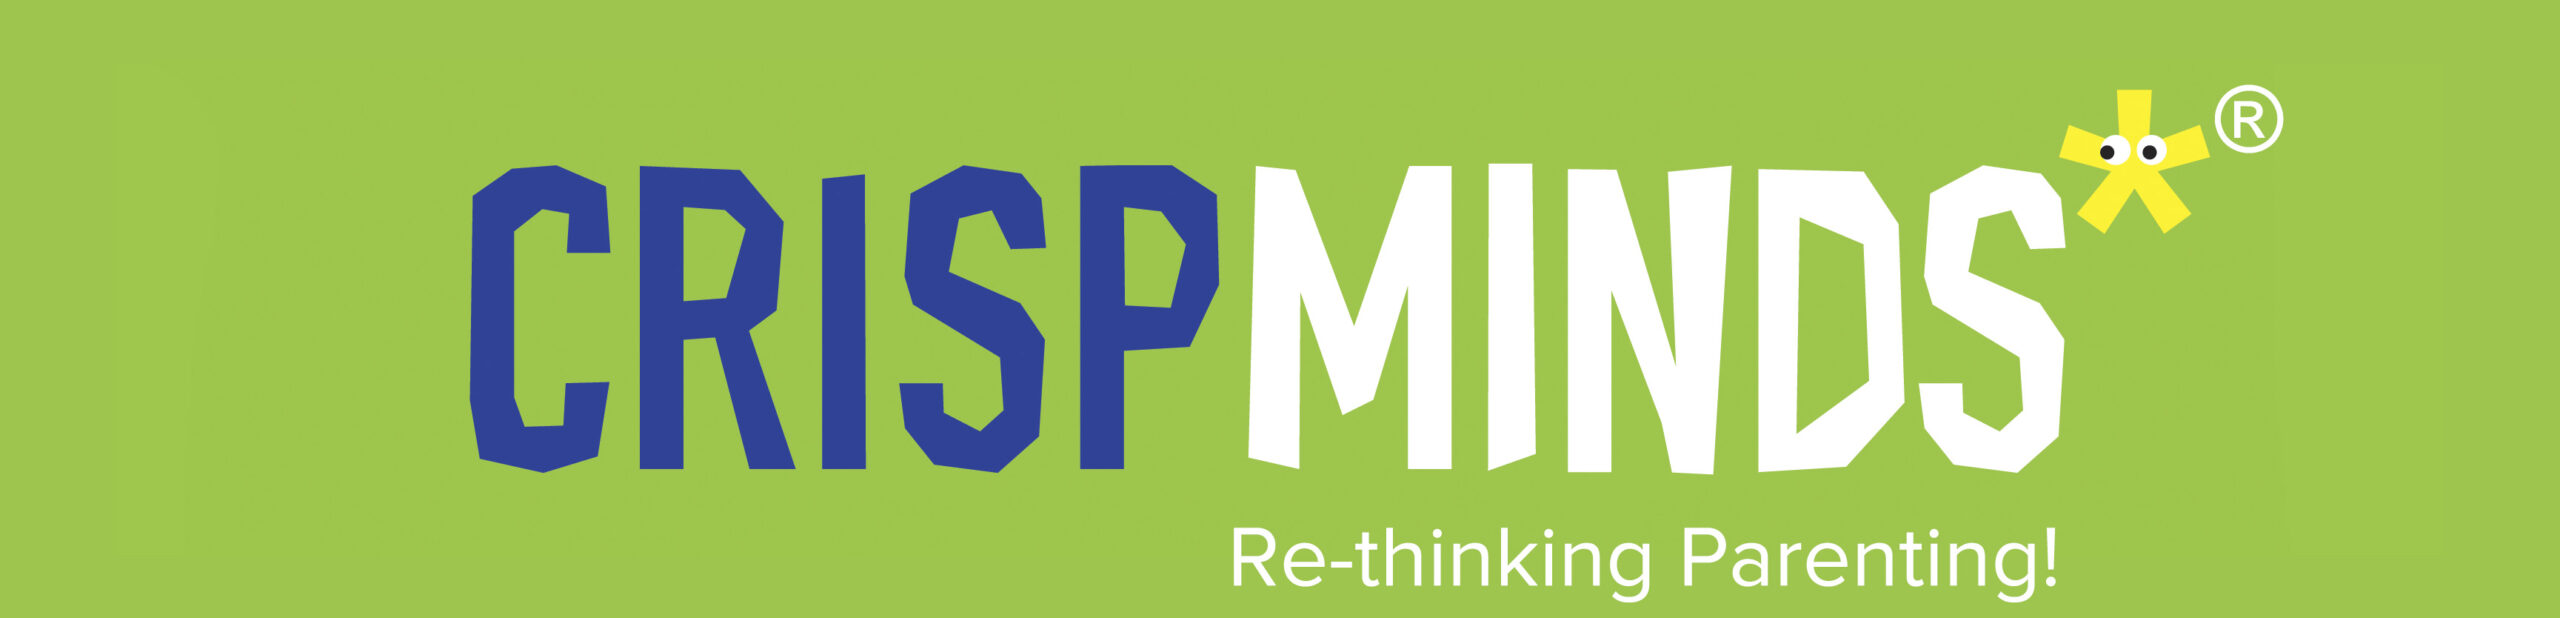 Crispminds Logo - R TL - 09.08.2021